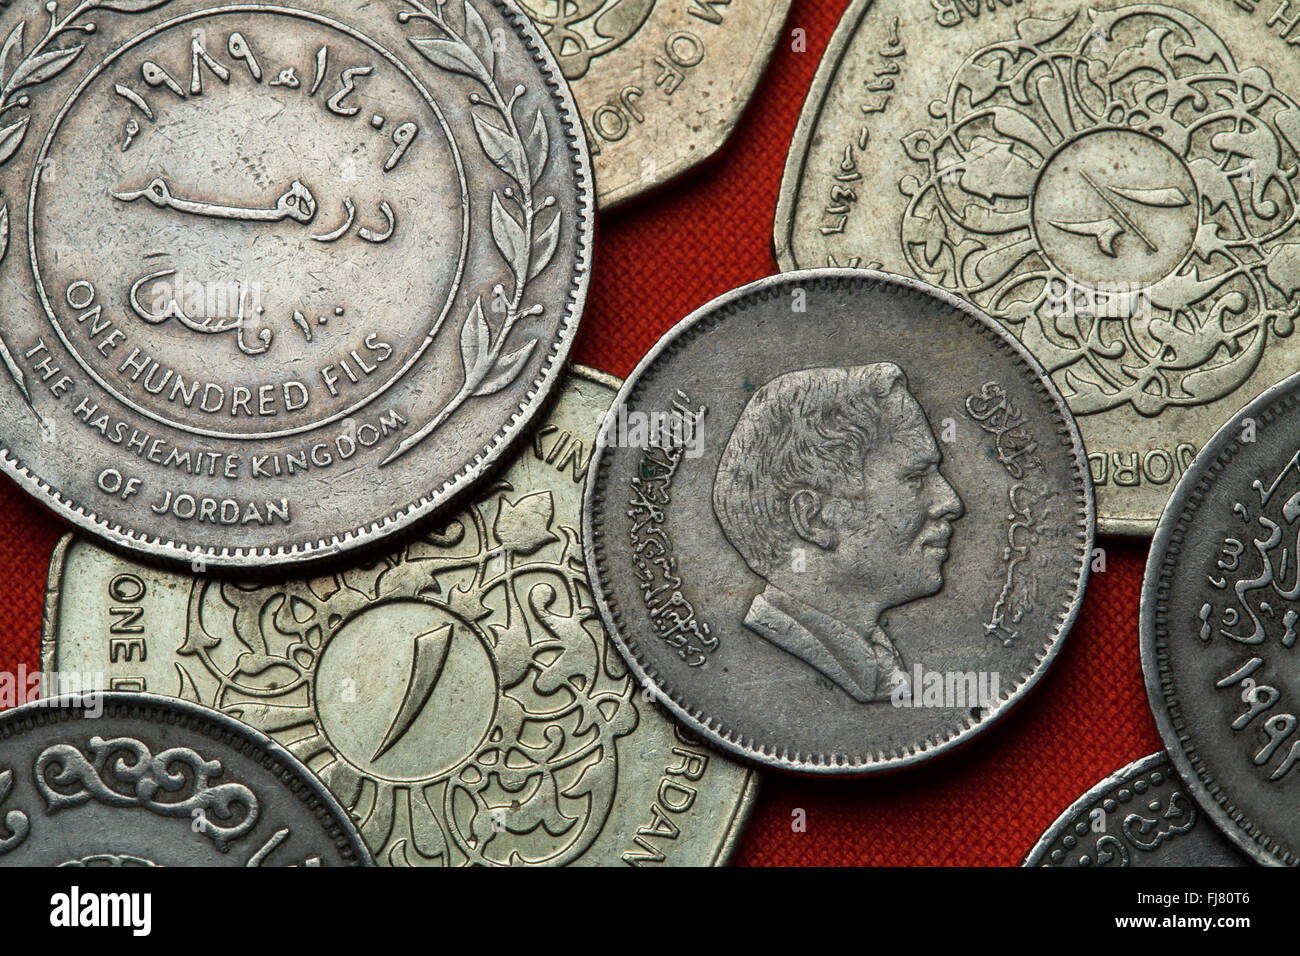 Coins of Jordan. King Hussein bin Talal of Jordan depicted in the Jordanian 25 fils coin. Stock Photo